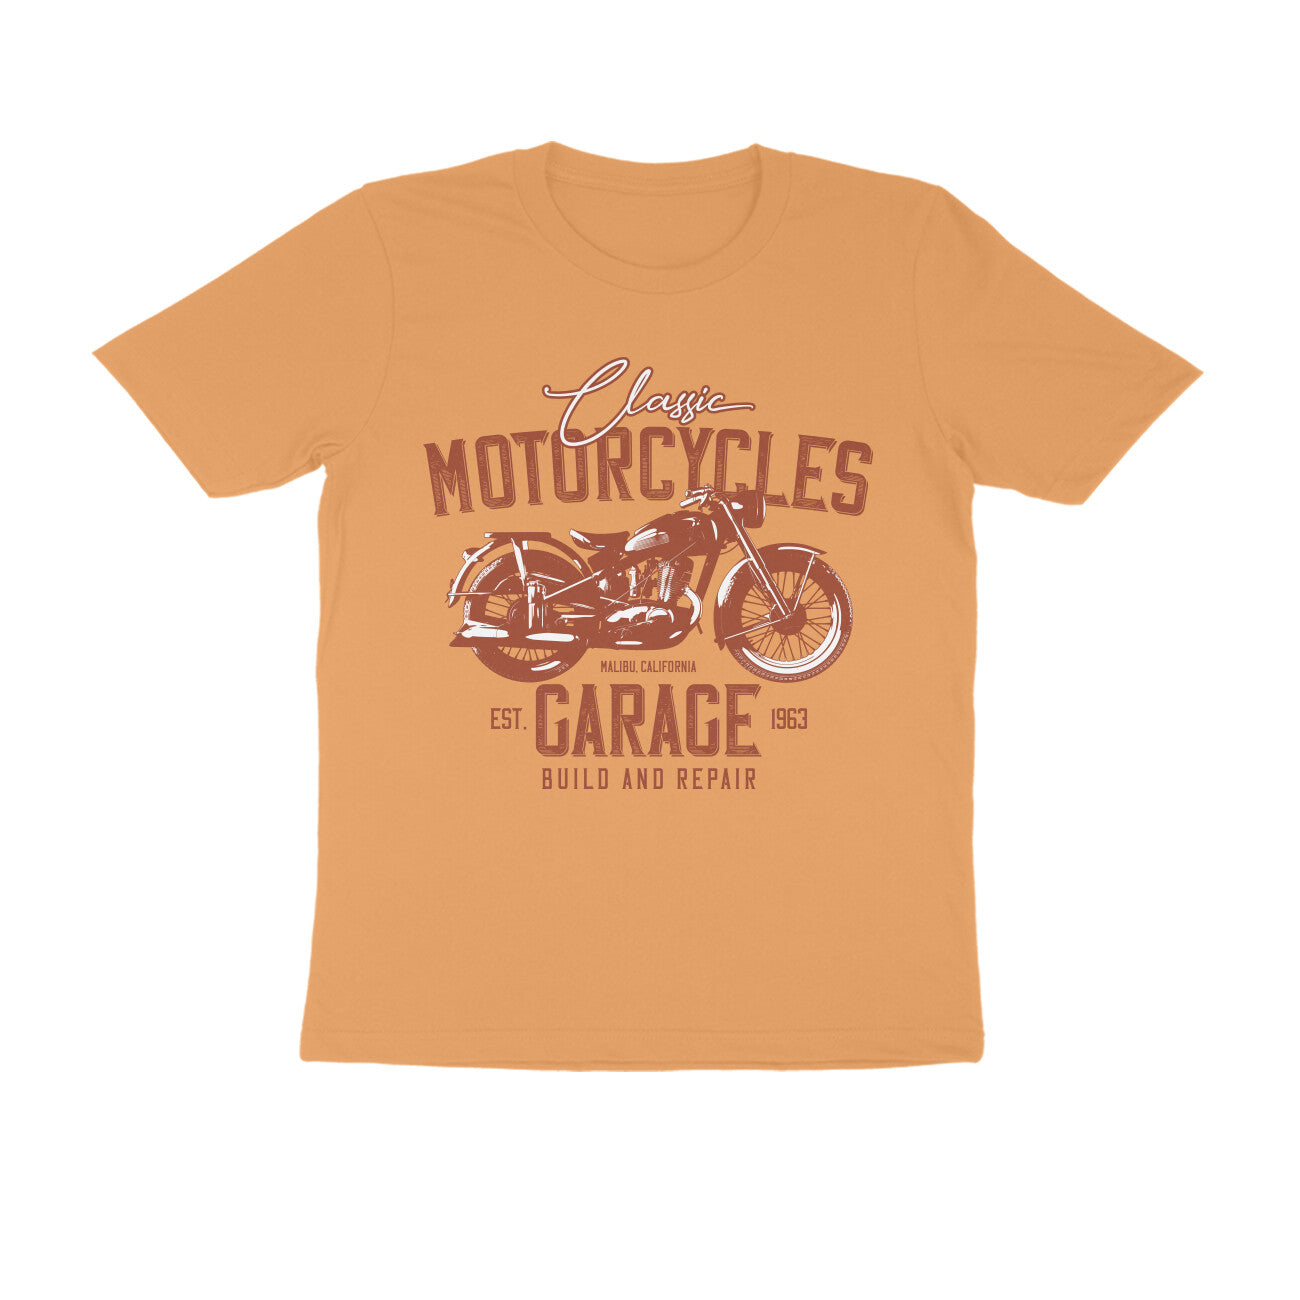 "Classic Motorcycles Garage Estd. 1963" T-Shirt